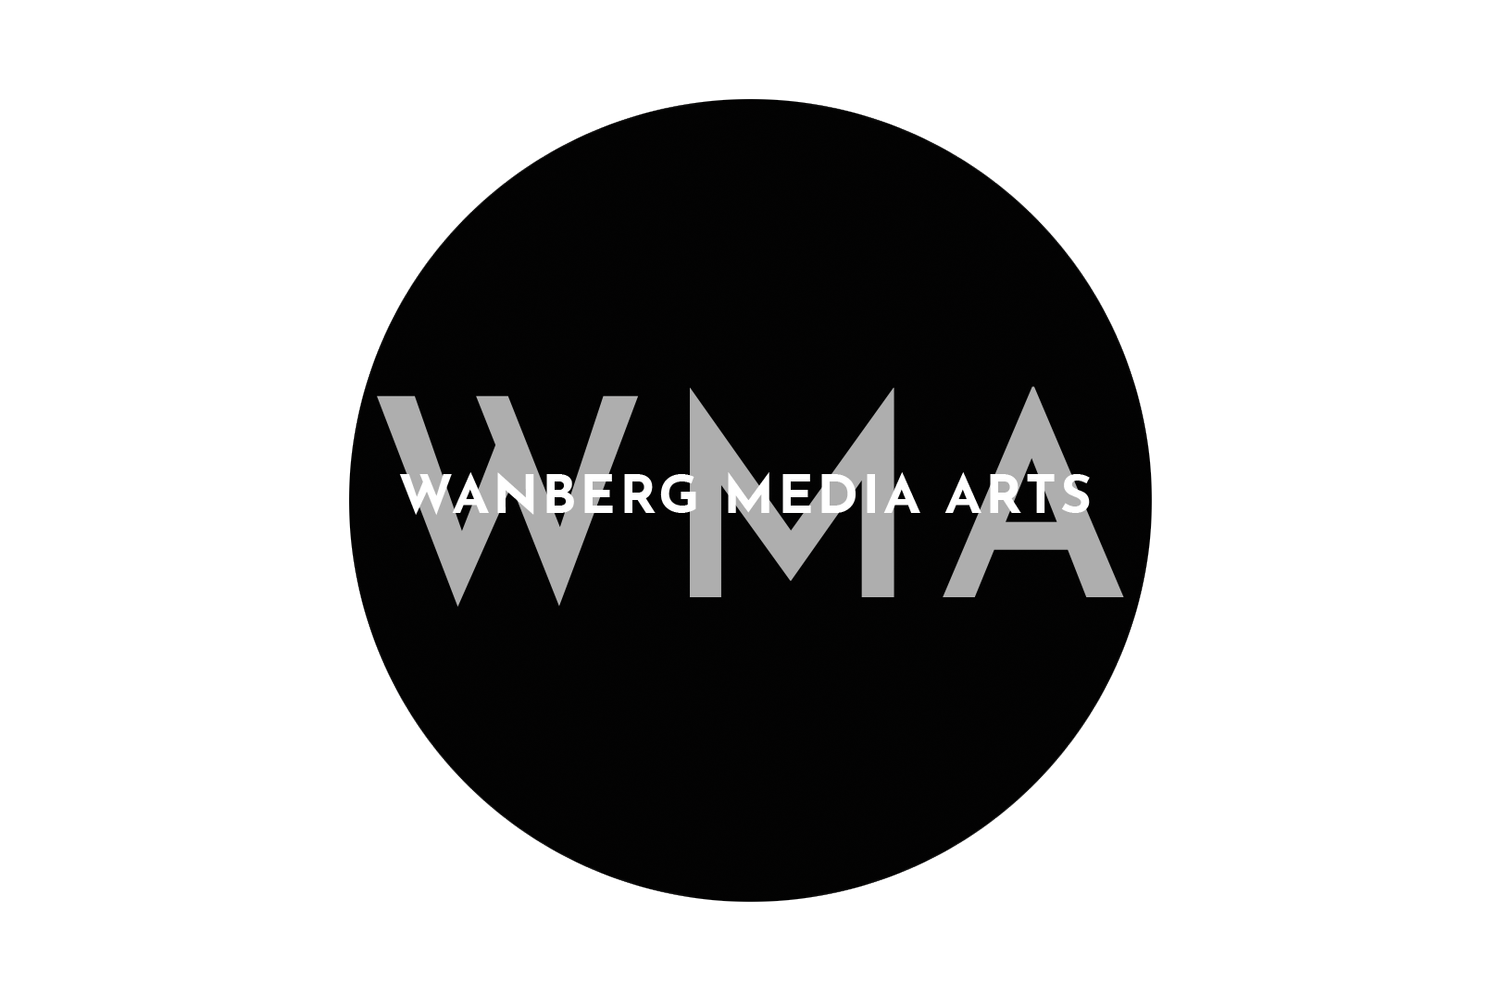 Wanberg Media Arts